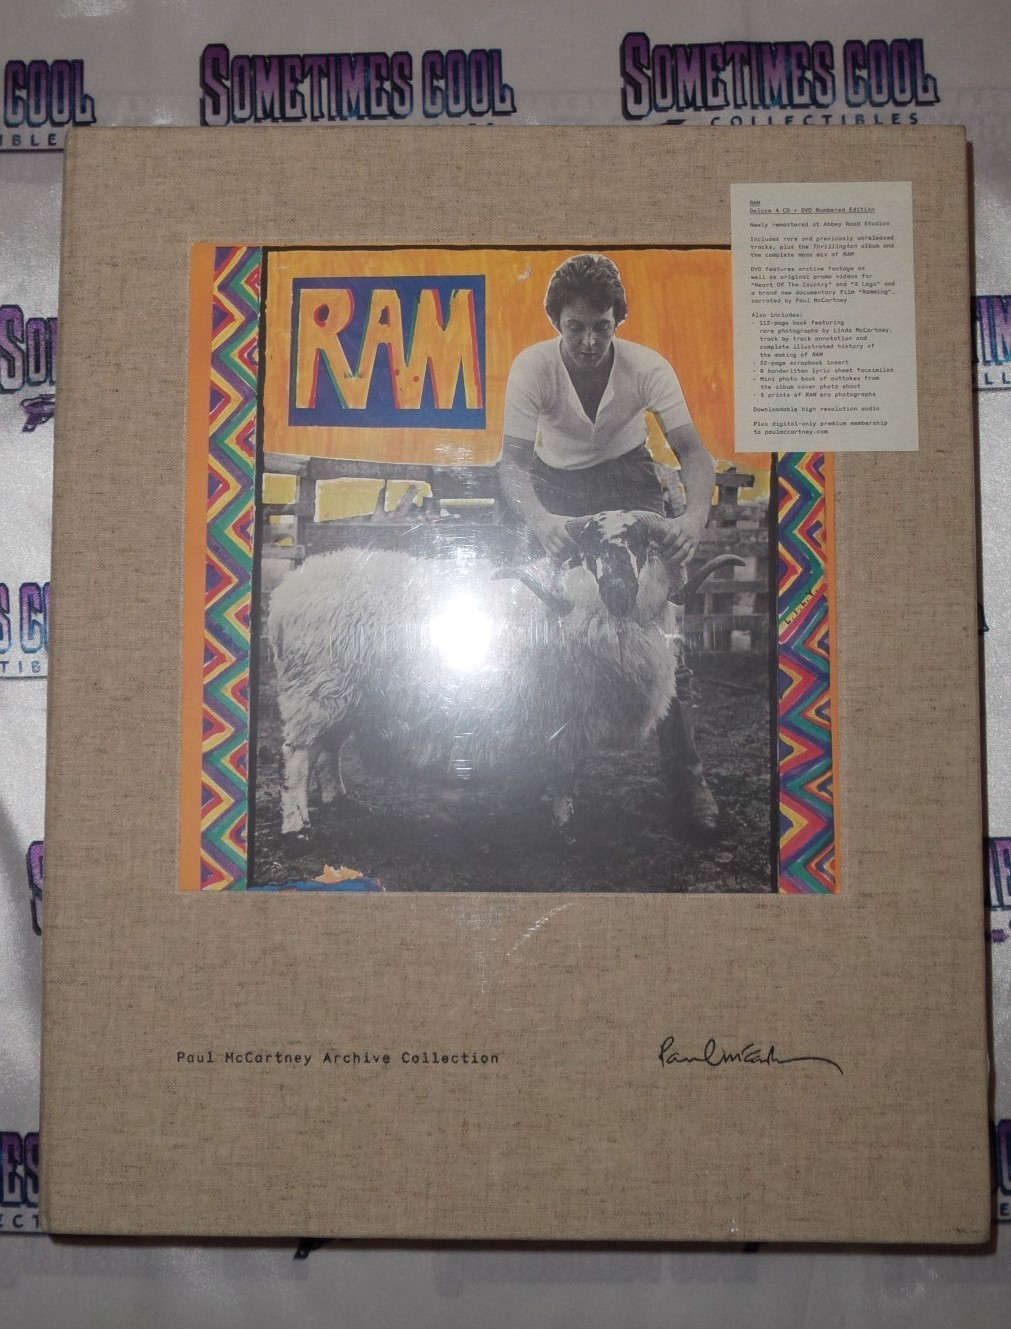 Paul McCartney Archive Collection : Ram